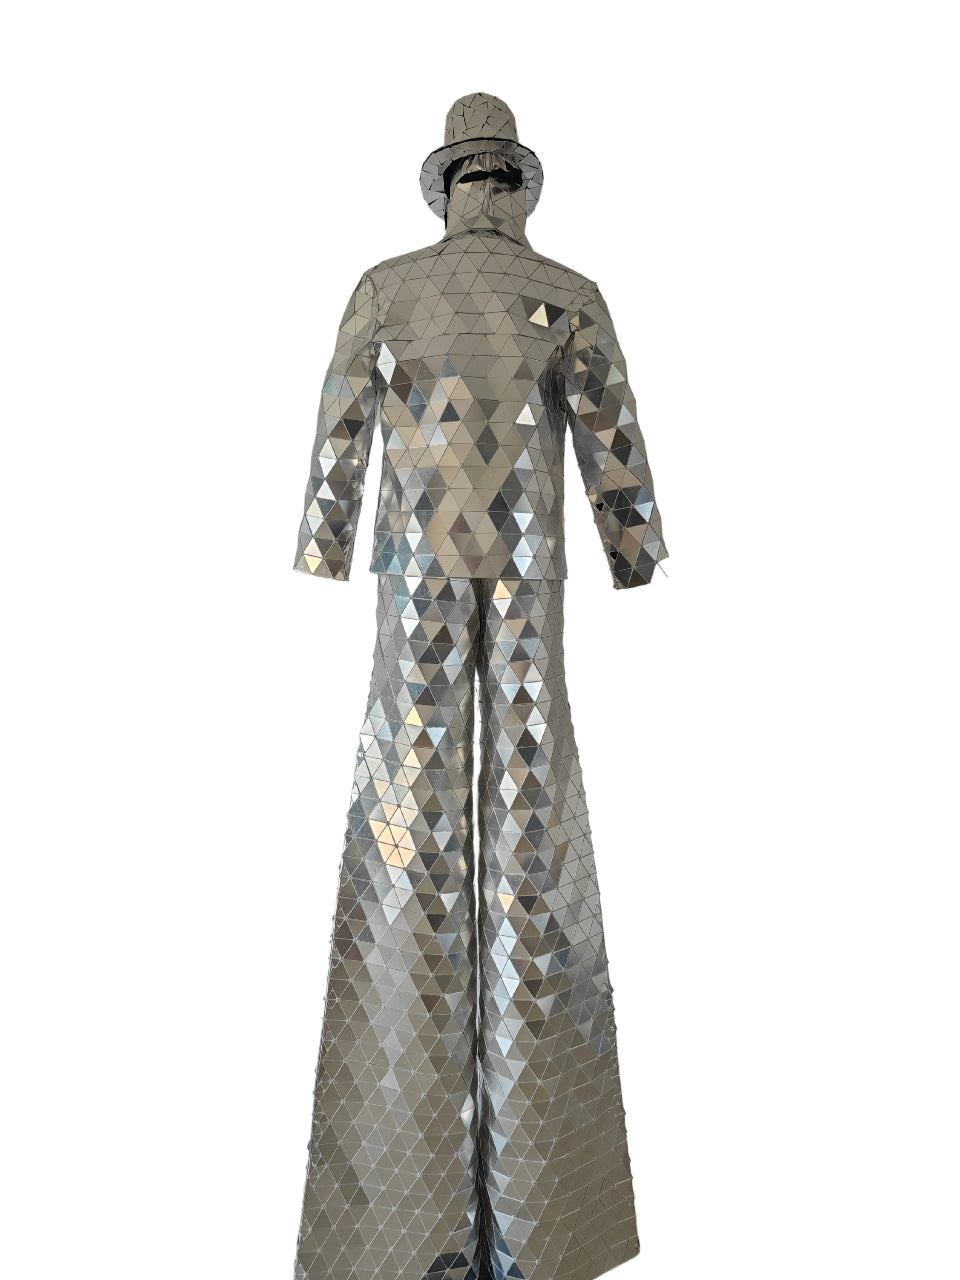 Mirrorman Costume Dance Performance Hand Sewn Stilt Walker Costume Suit for Men Women Adult